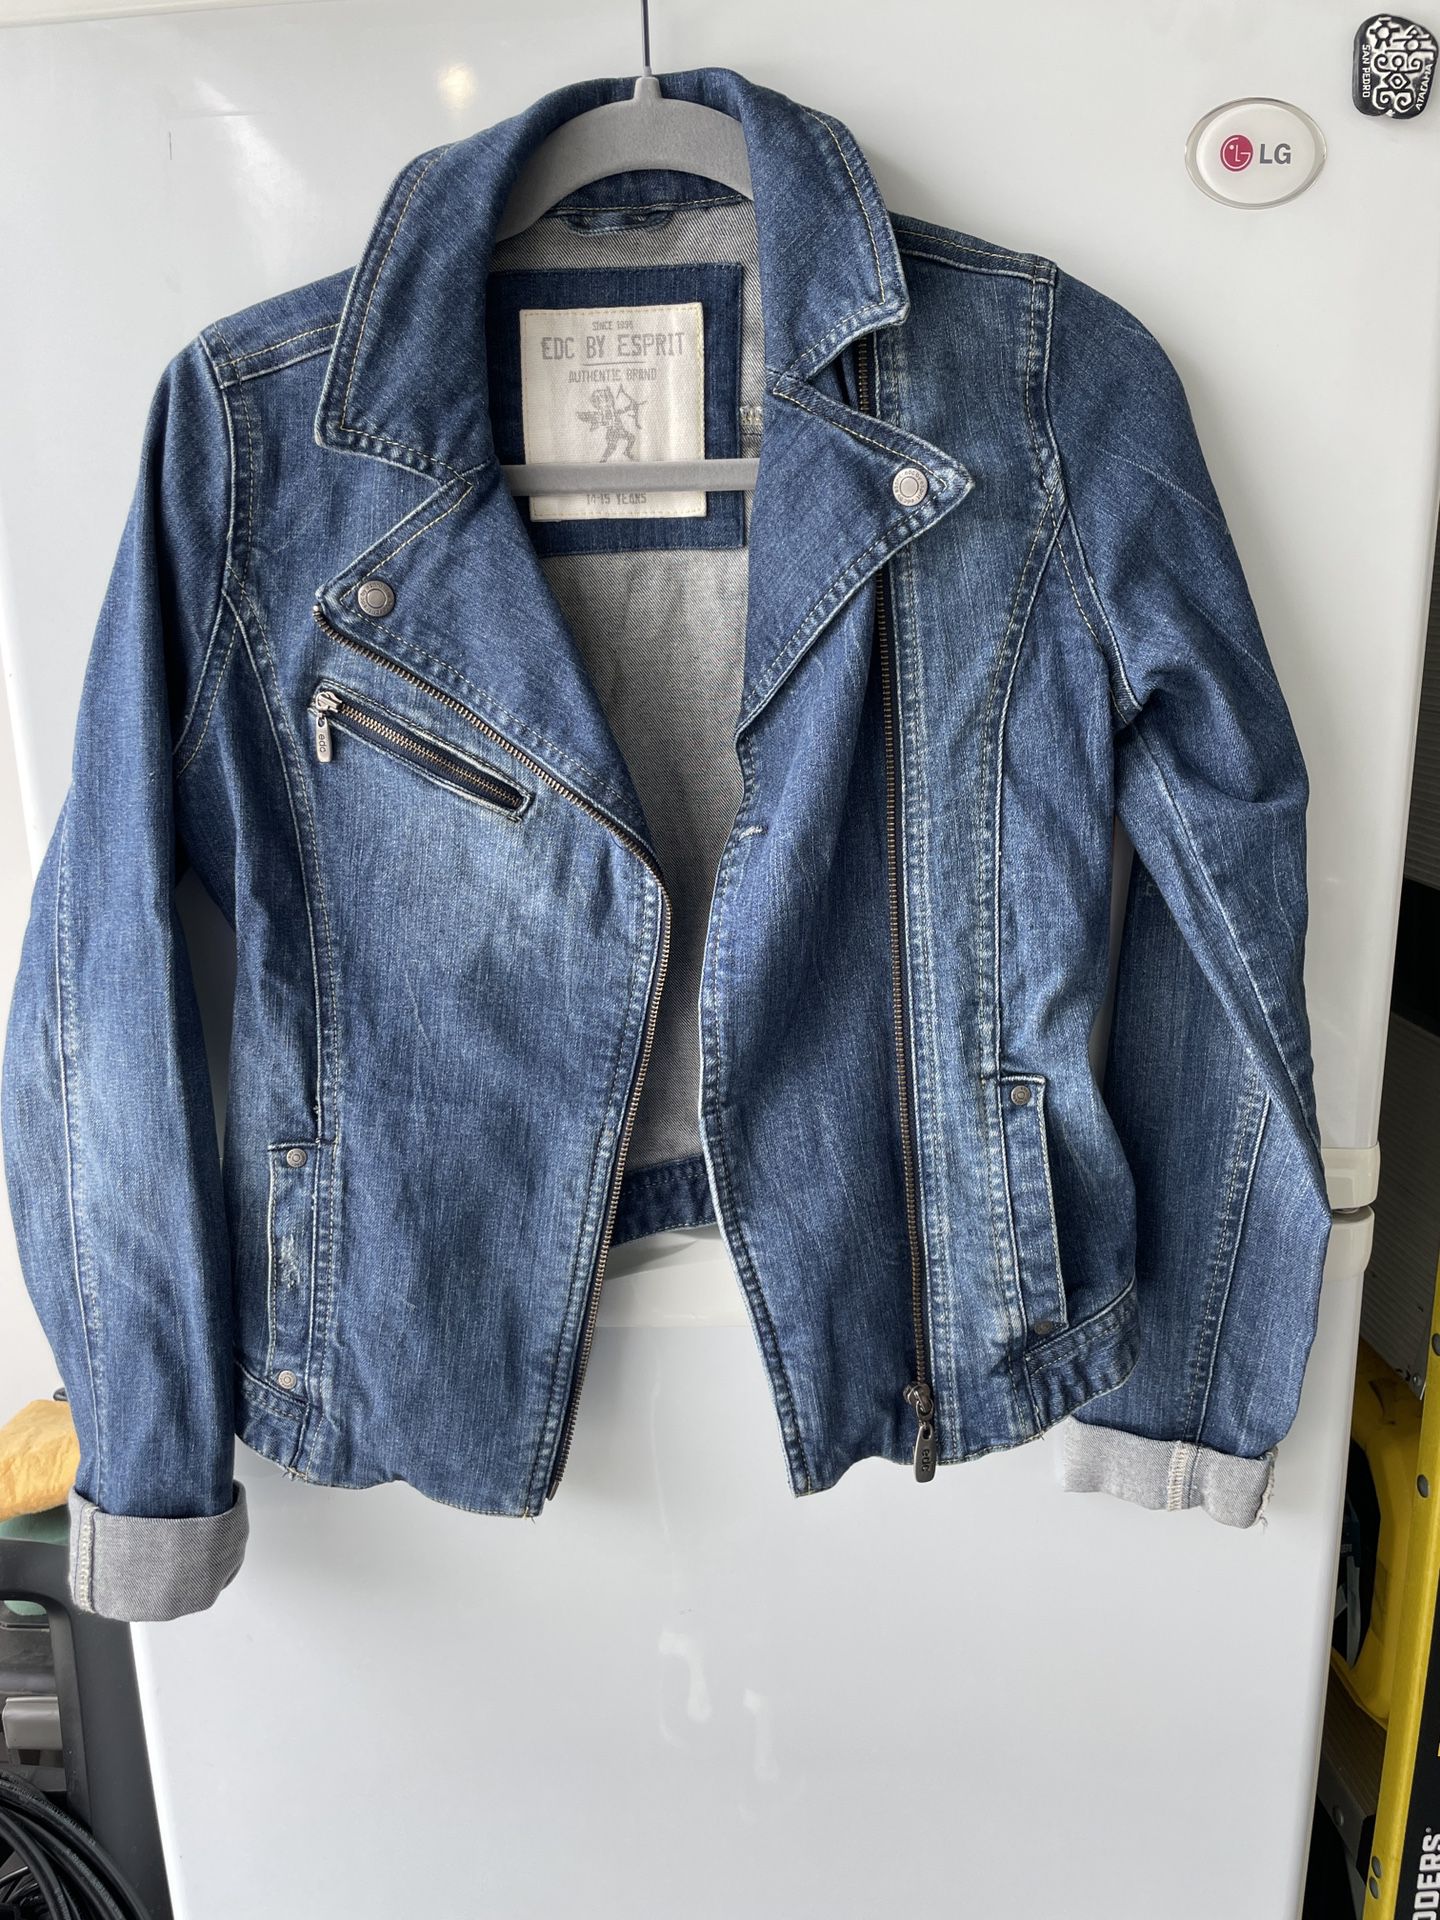 Jeans Jacket for Sale in Burbank, CA - OfferUp